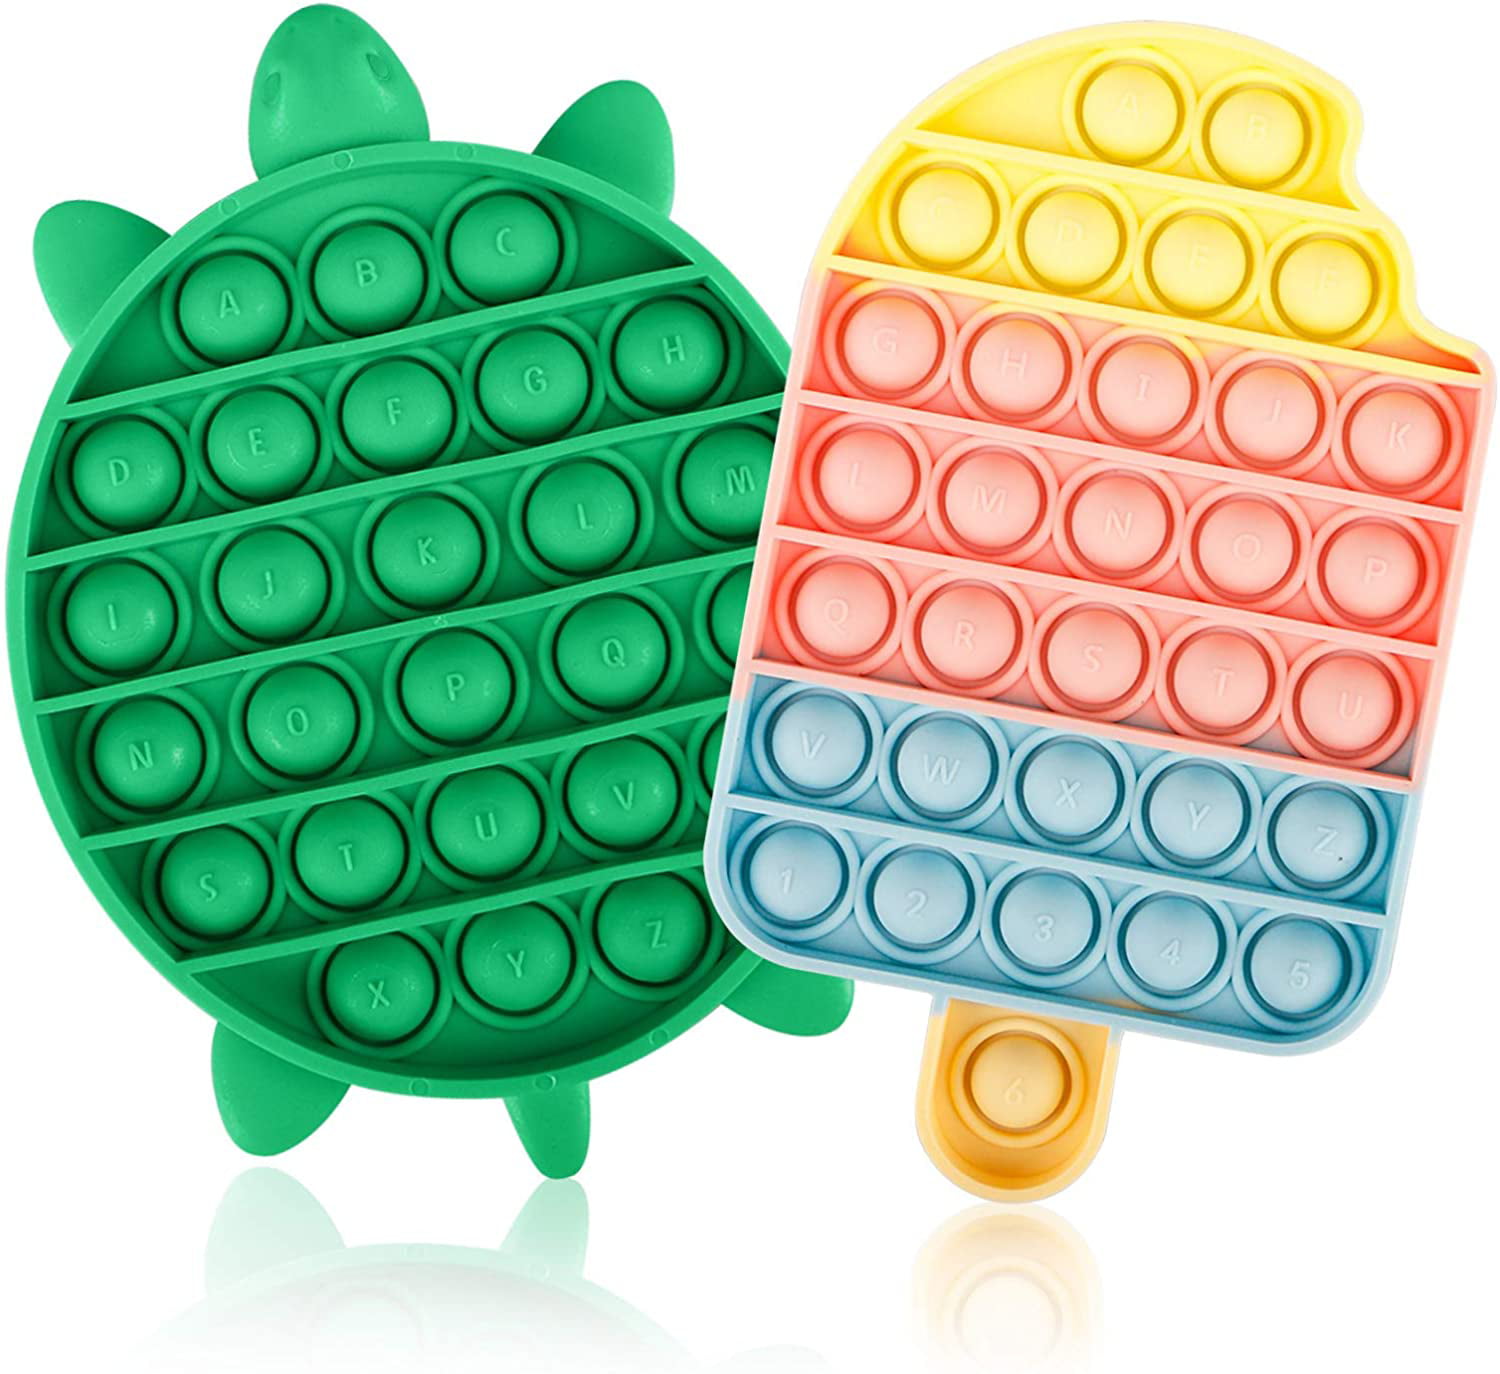 Details about   Fidget Toys Simple Dimple Anti Stress Toy Stress Relief Kid Autism Sensory Toy 